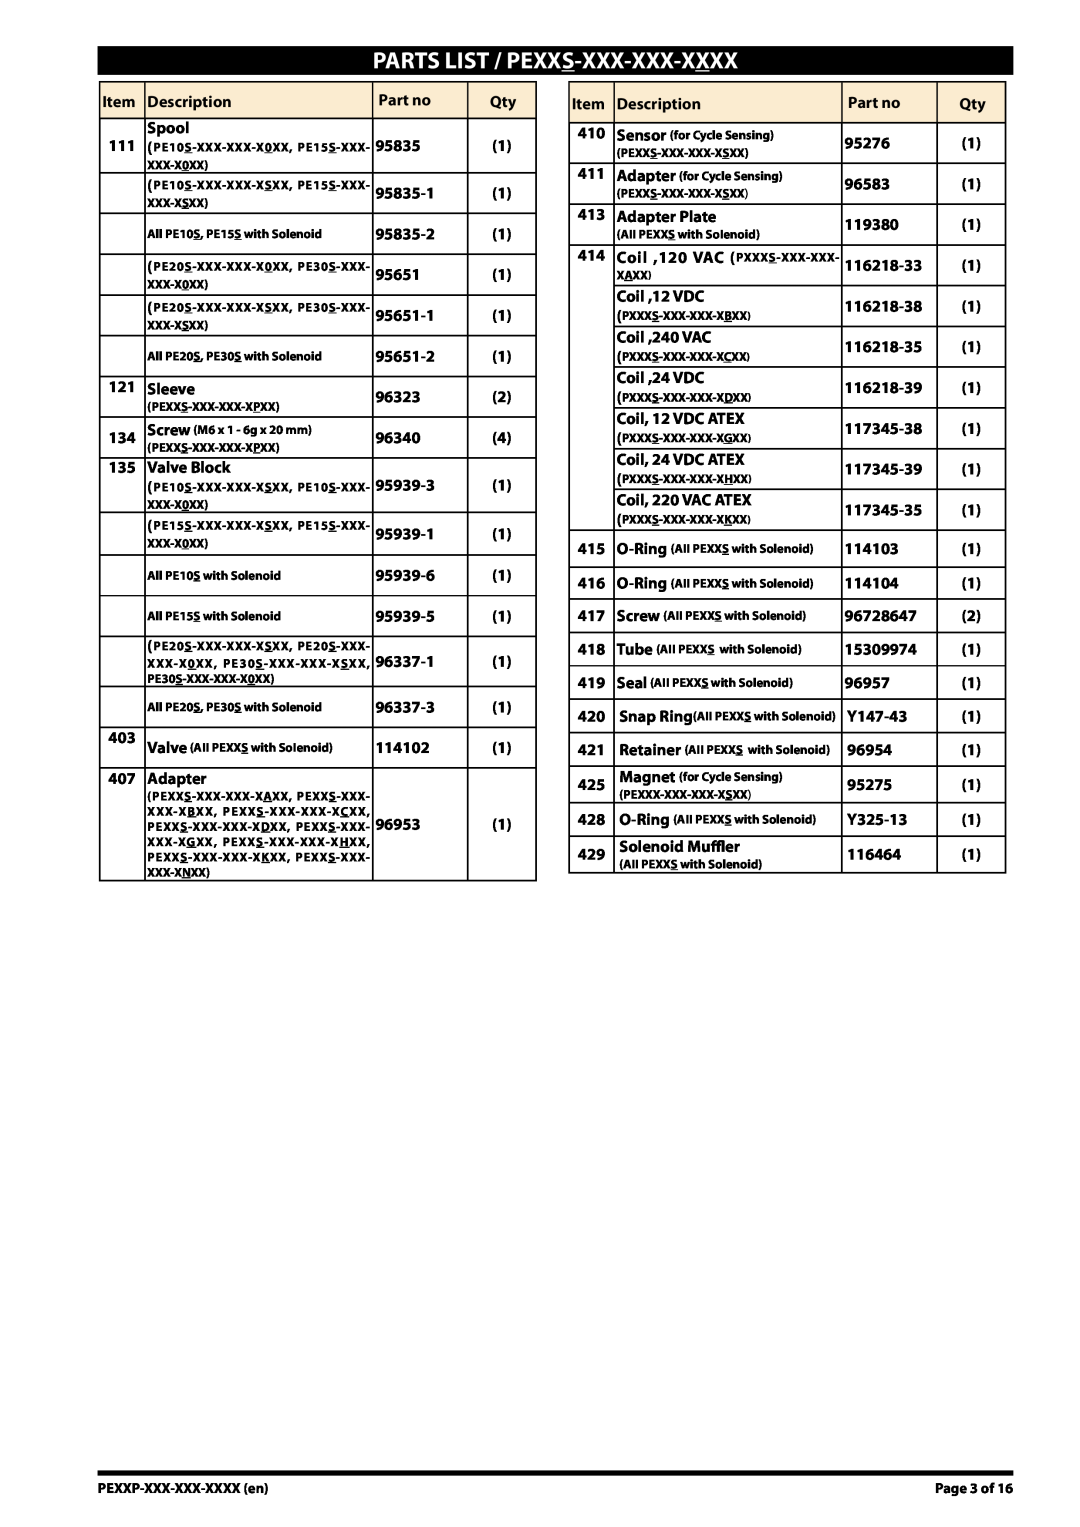 Ingersoll-Rand PE15X-XXX-XXX-XXXX, PE30X-XXX-XXX-XXXX Parts List / Pexxs-Xxx-Xxx-Xxxx, Snap RingAII PEXXS with Solenoid 